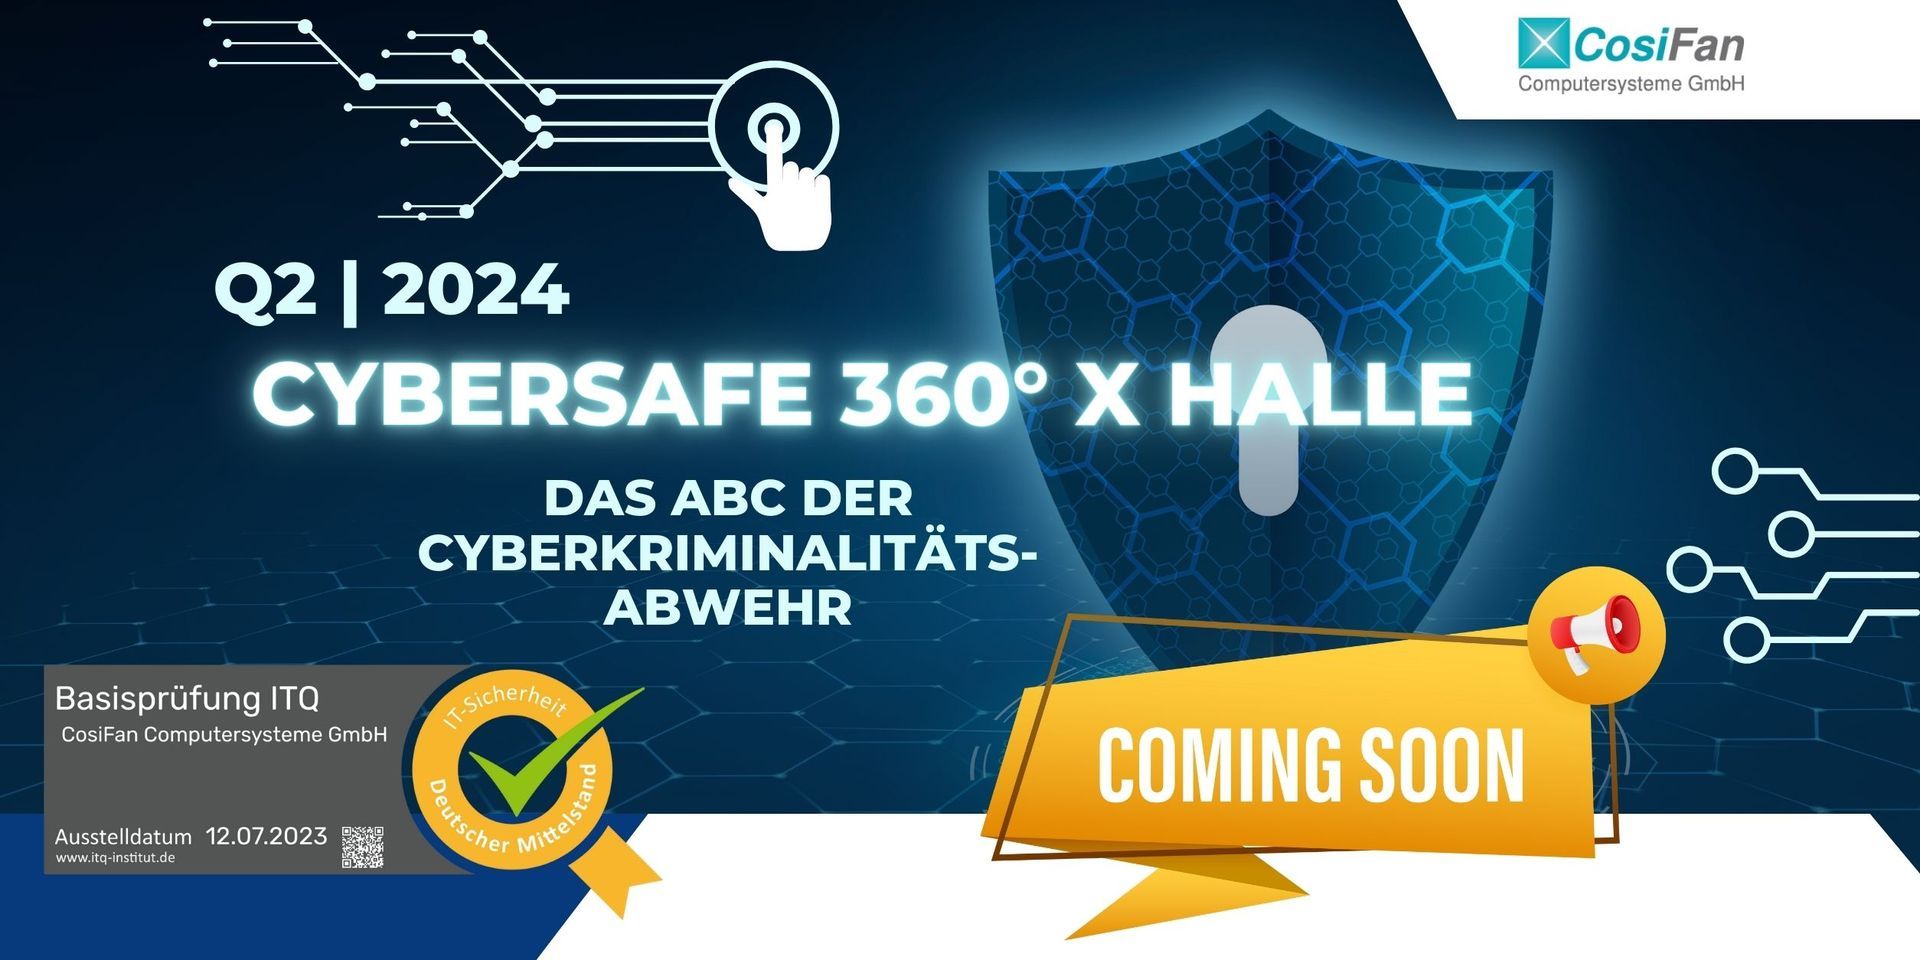 Q2 2024 CyberSafe 360 x Halle